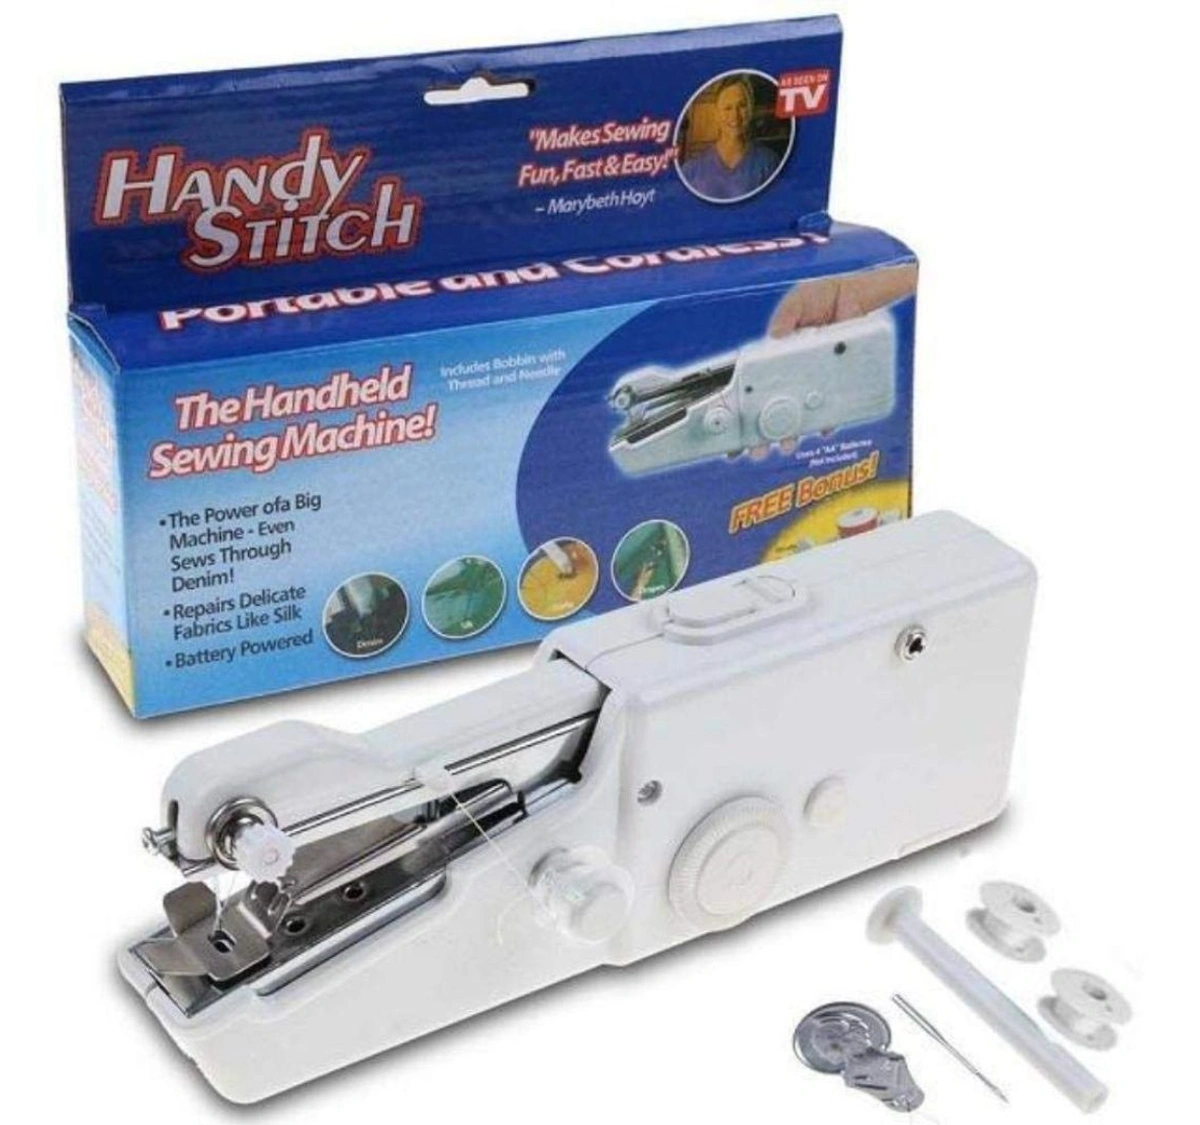 Mini Handheld Sewing Machine, Portable Handy Stitch Electric